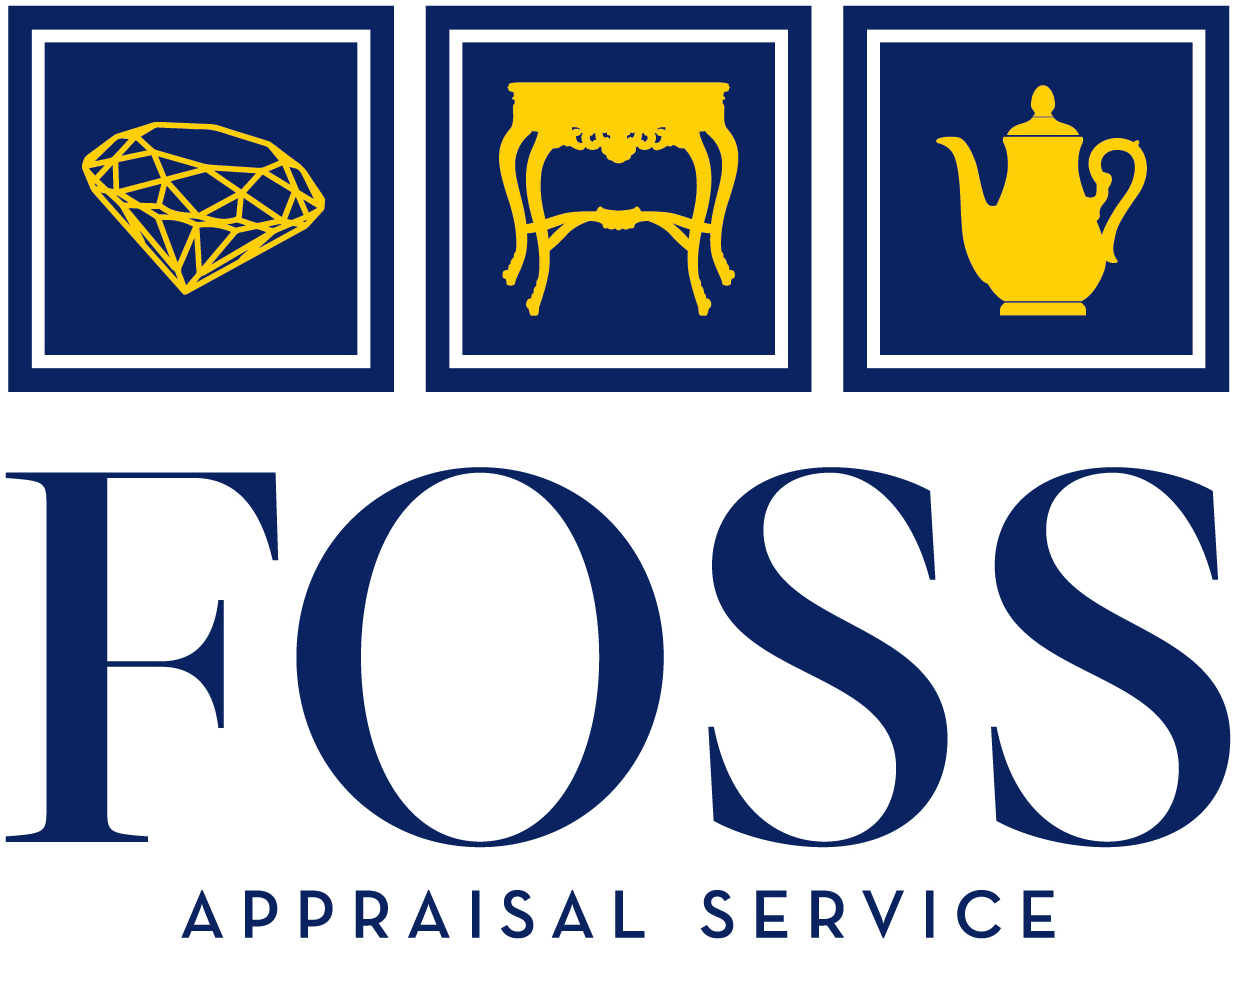 Foss Appraisal Service | AuctionNinja